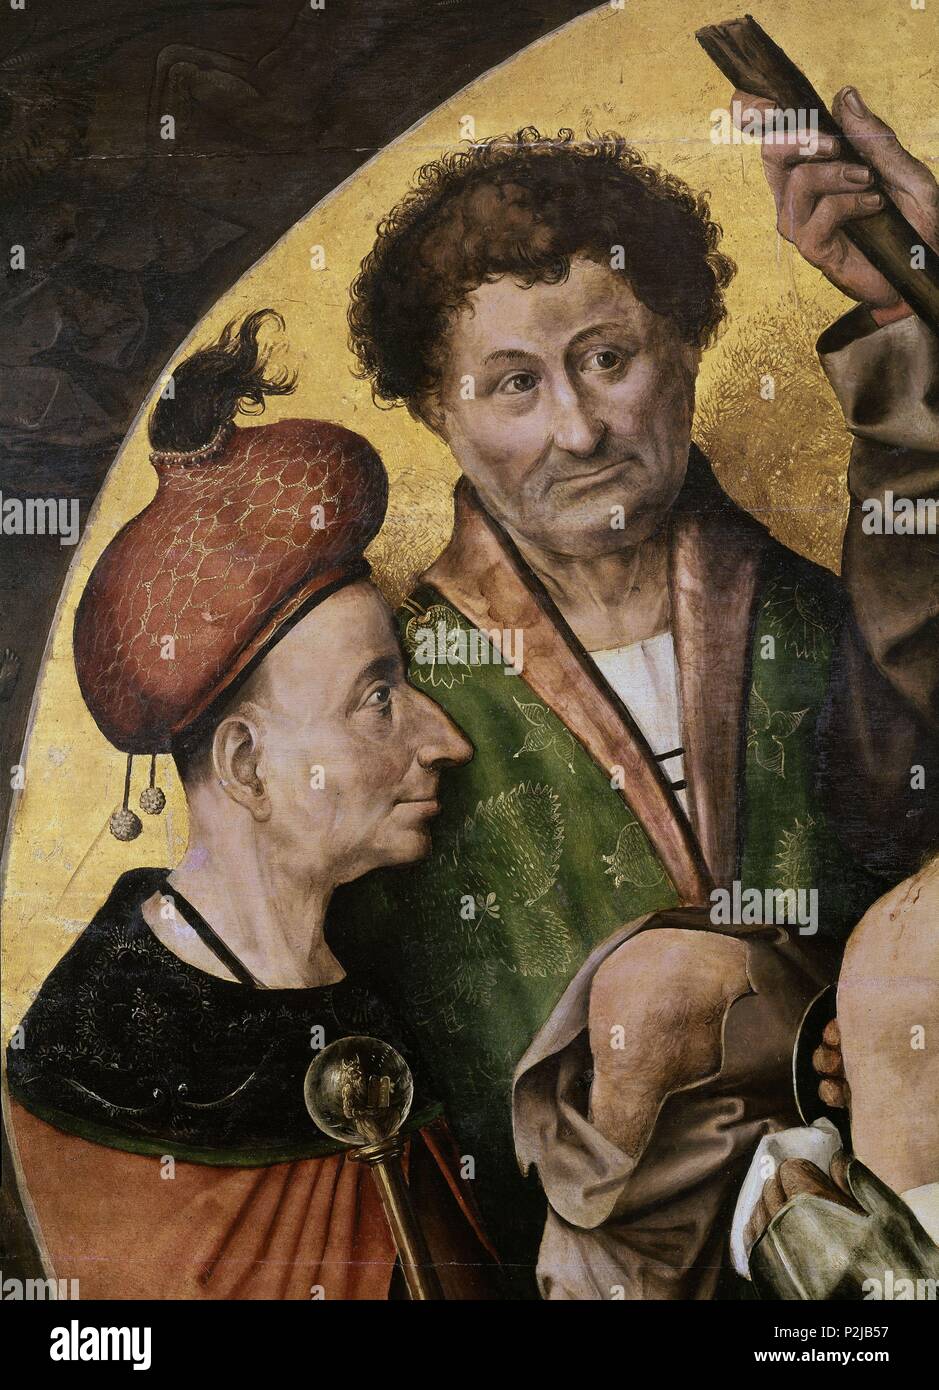 'Christ Crowned with Thorns' (detail), 1510, Oil on panel. Author: Hieronymus Bosch (c. 1450-1516). Location: MONASTERIO-PINTURA, SAN LORENZO DEL ESCORIAL, MADRID, SPAIN. Stock Photo